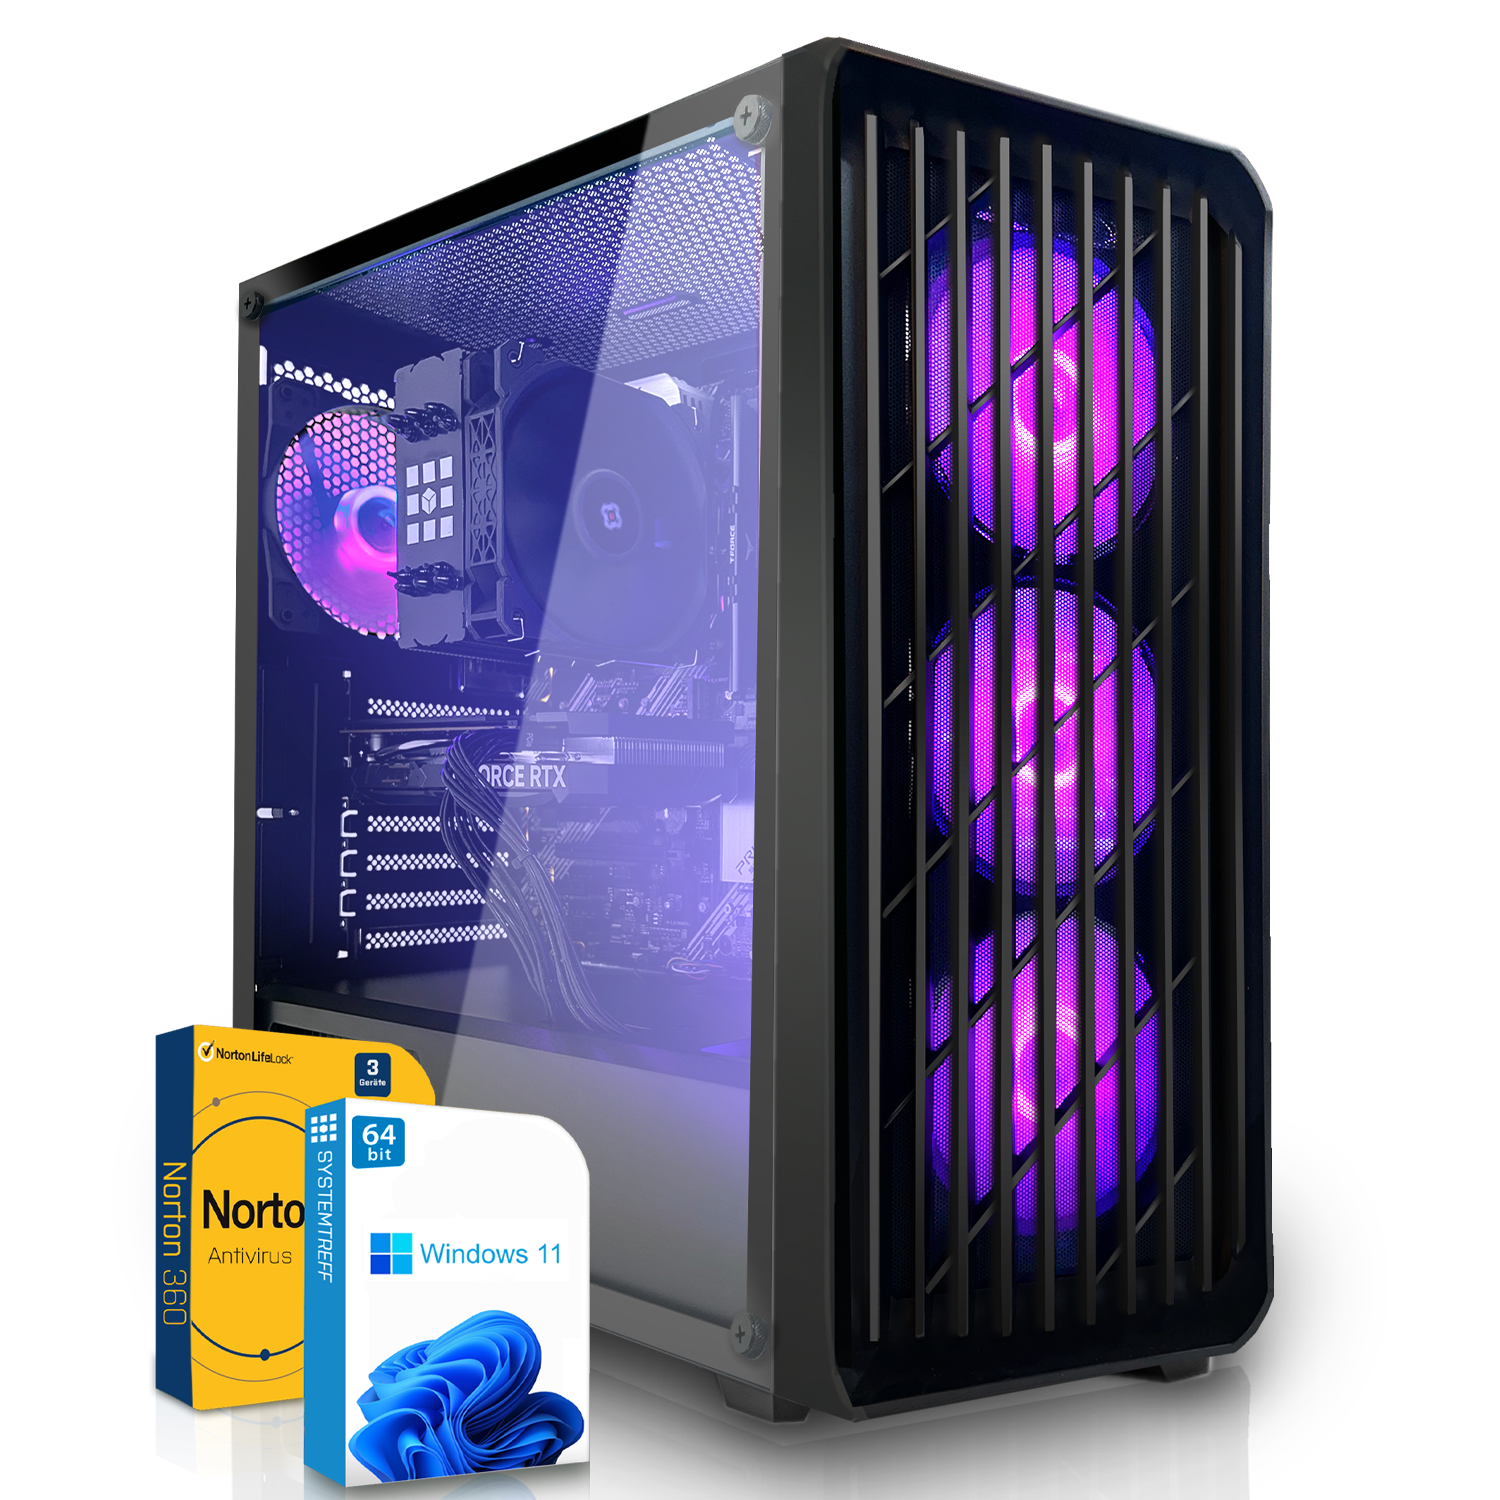 SYSTEMTREFF Pro Gaming GB AMD RAM, mSSD, RX PC AMD 5 Windows 5 AMD Ryzen™ Ryzen 7600X, Prozessor, Radeon™ 1000 Gaming 7600S Pro, 11 mit GB 32